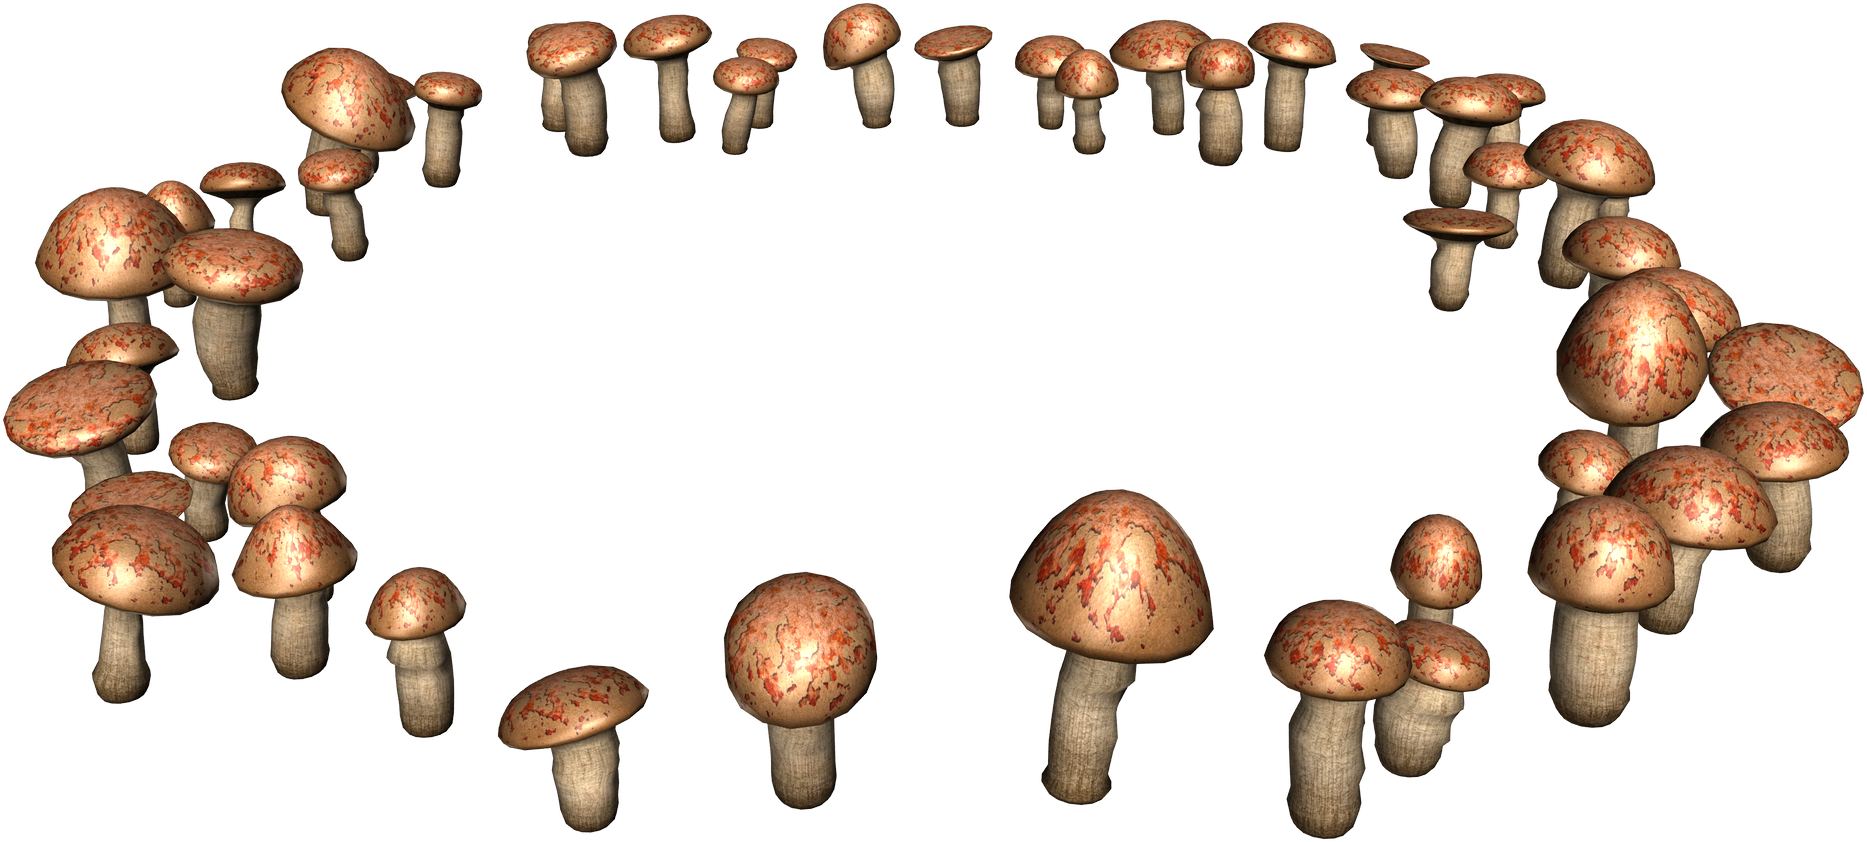 Фоторамка с грибами на прозрачном фоне фото